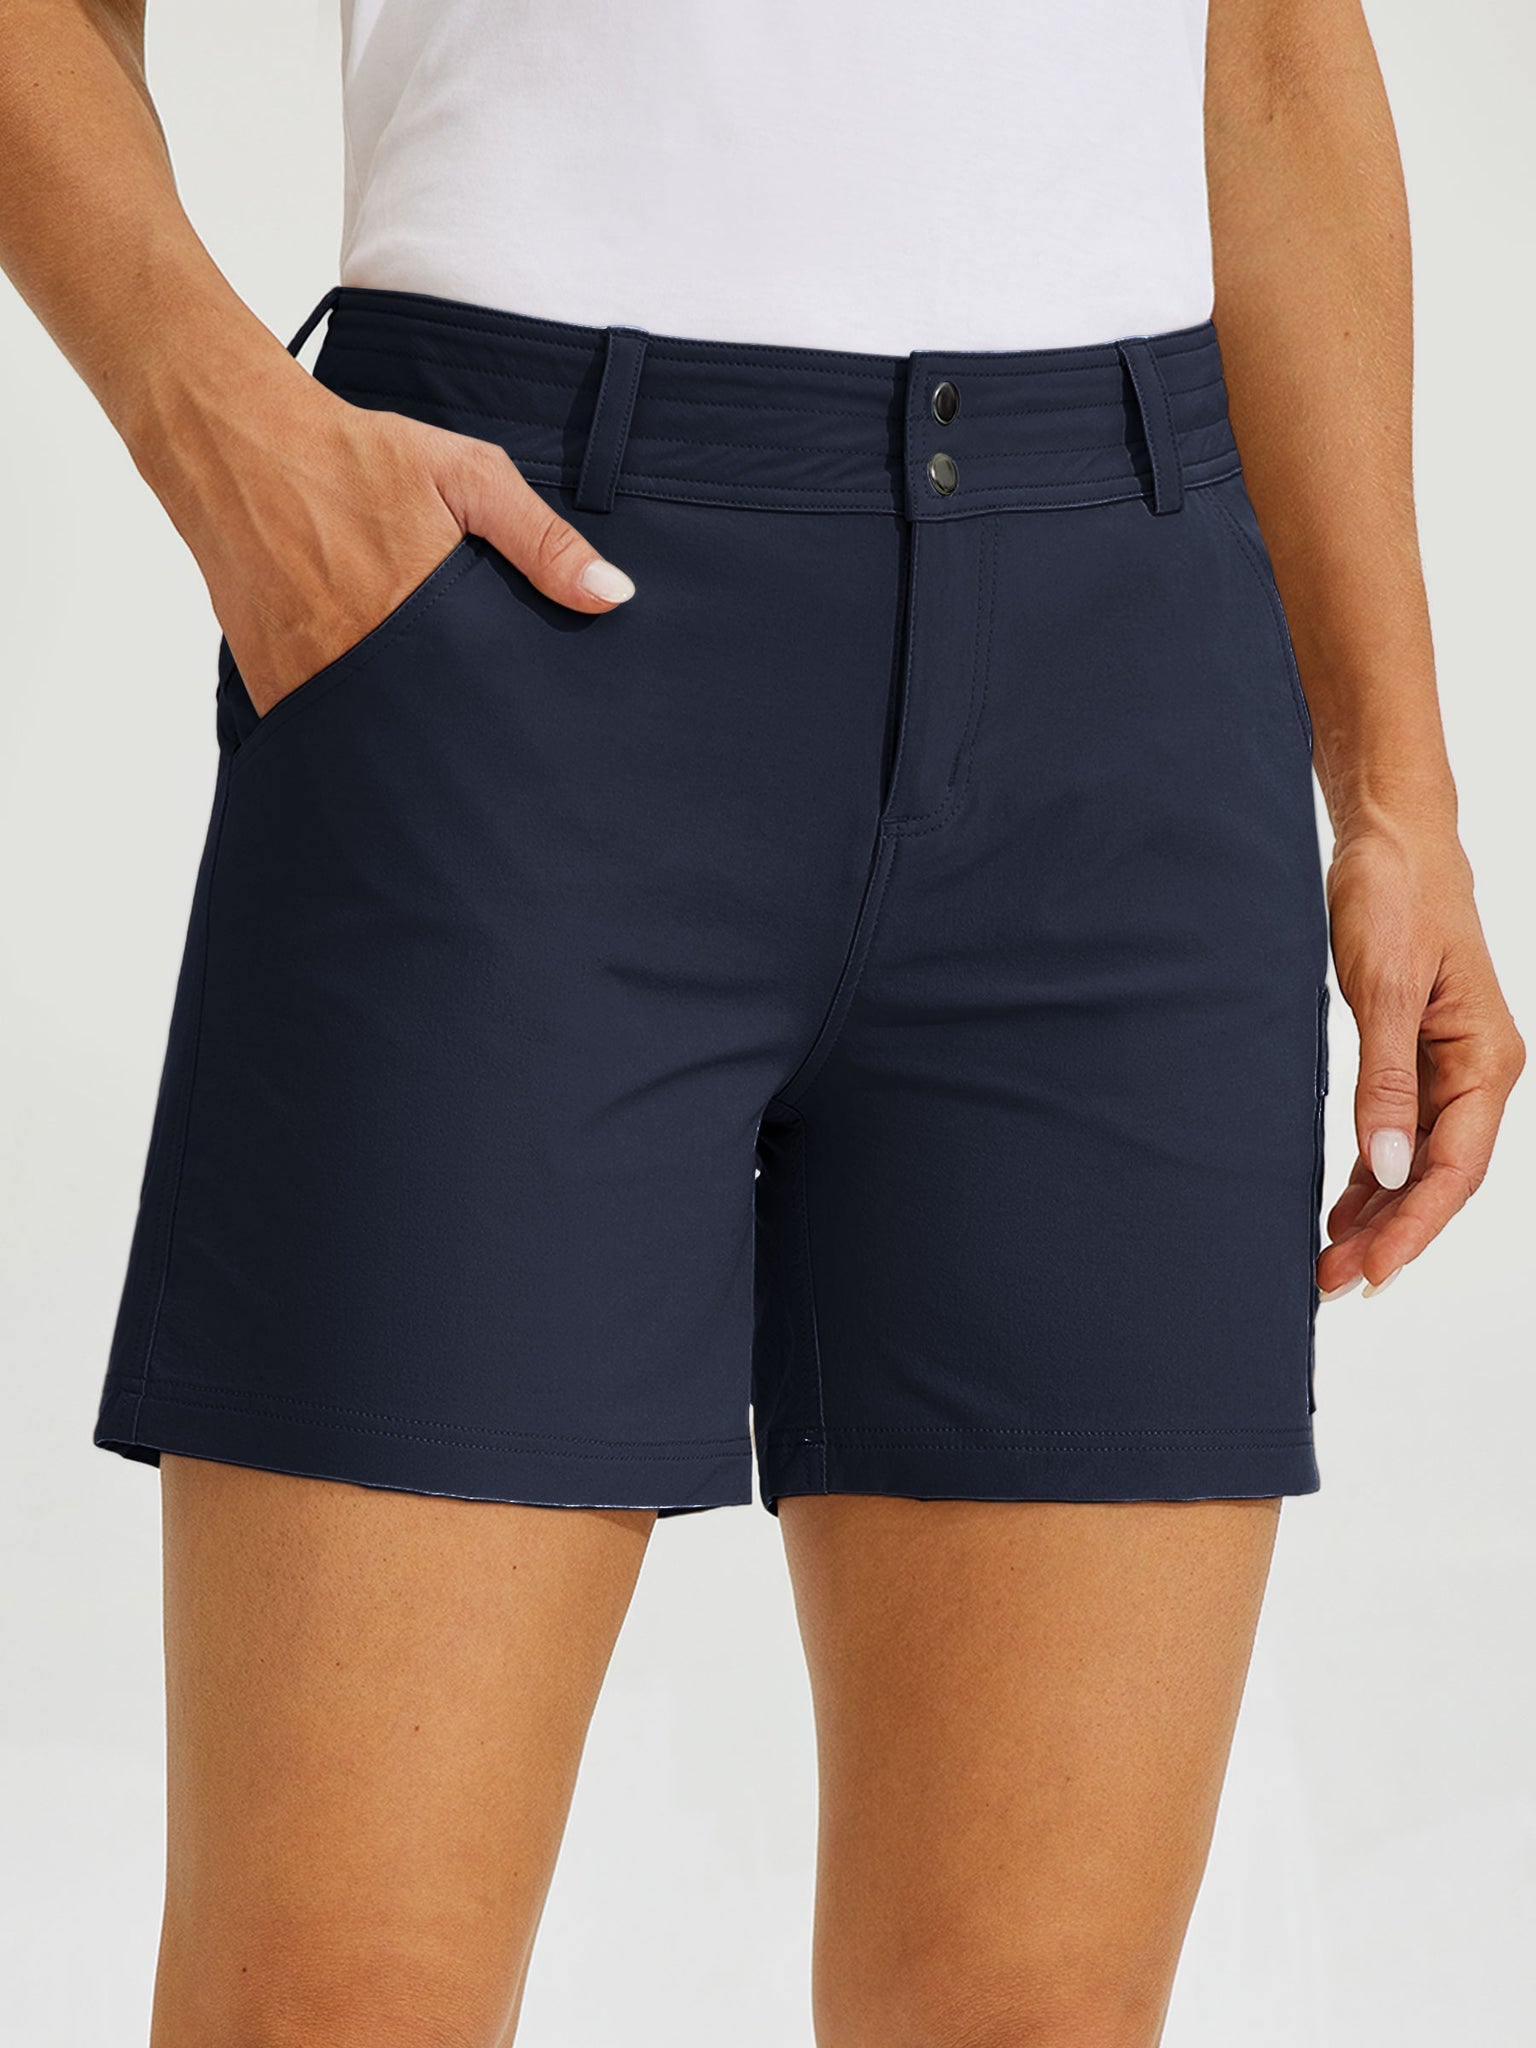 Women's Outdoor Pro Shorts 5Inch_Blue1